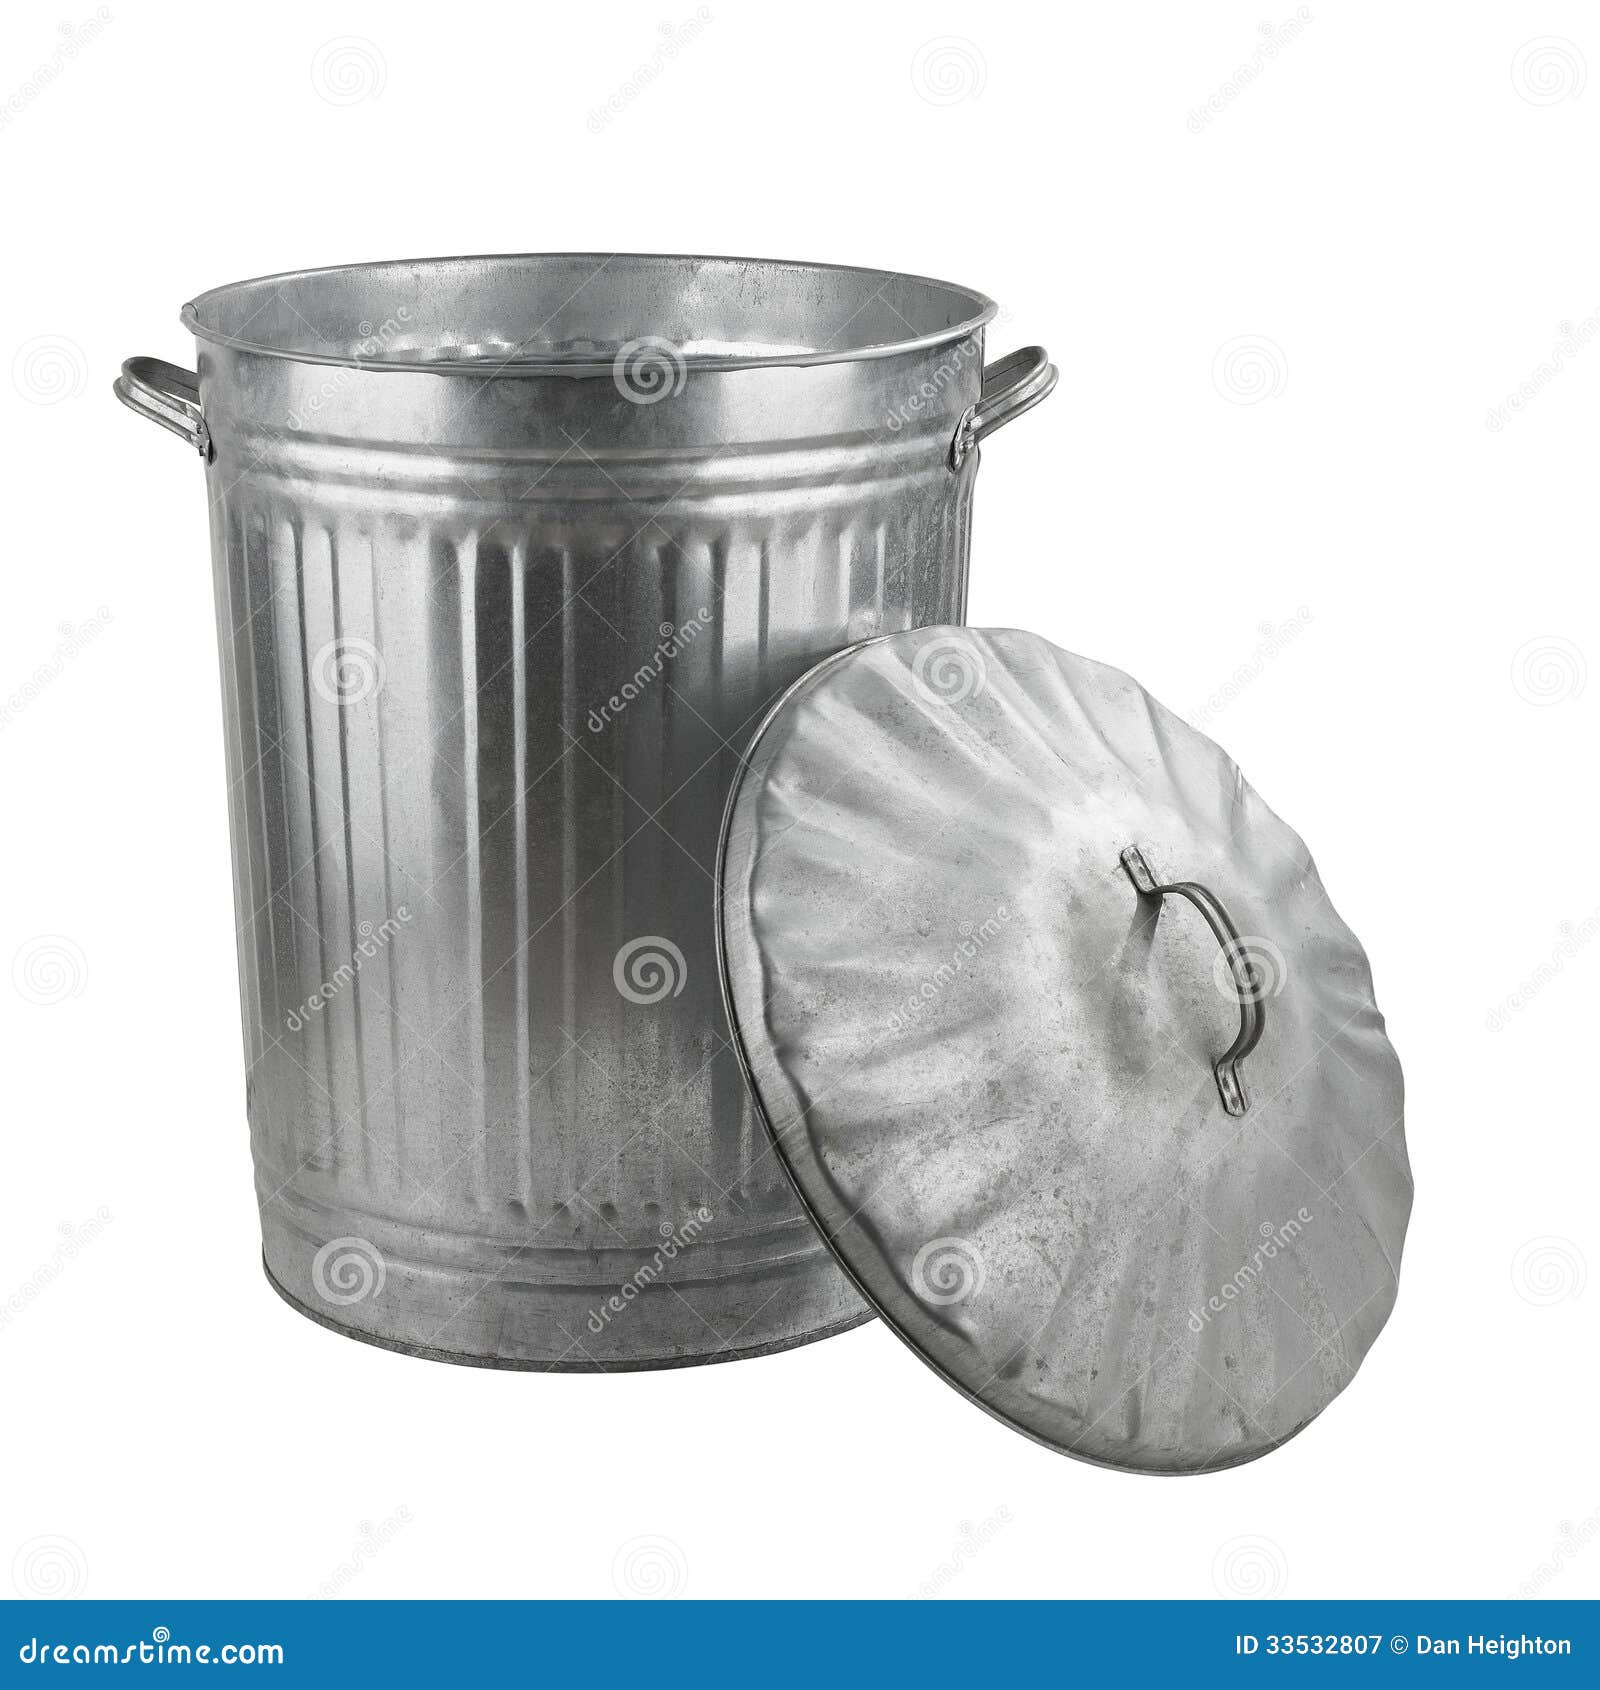 silver steel trash can